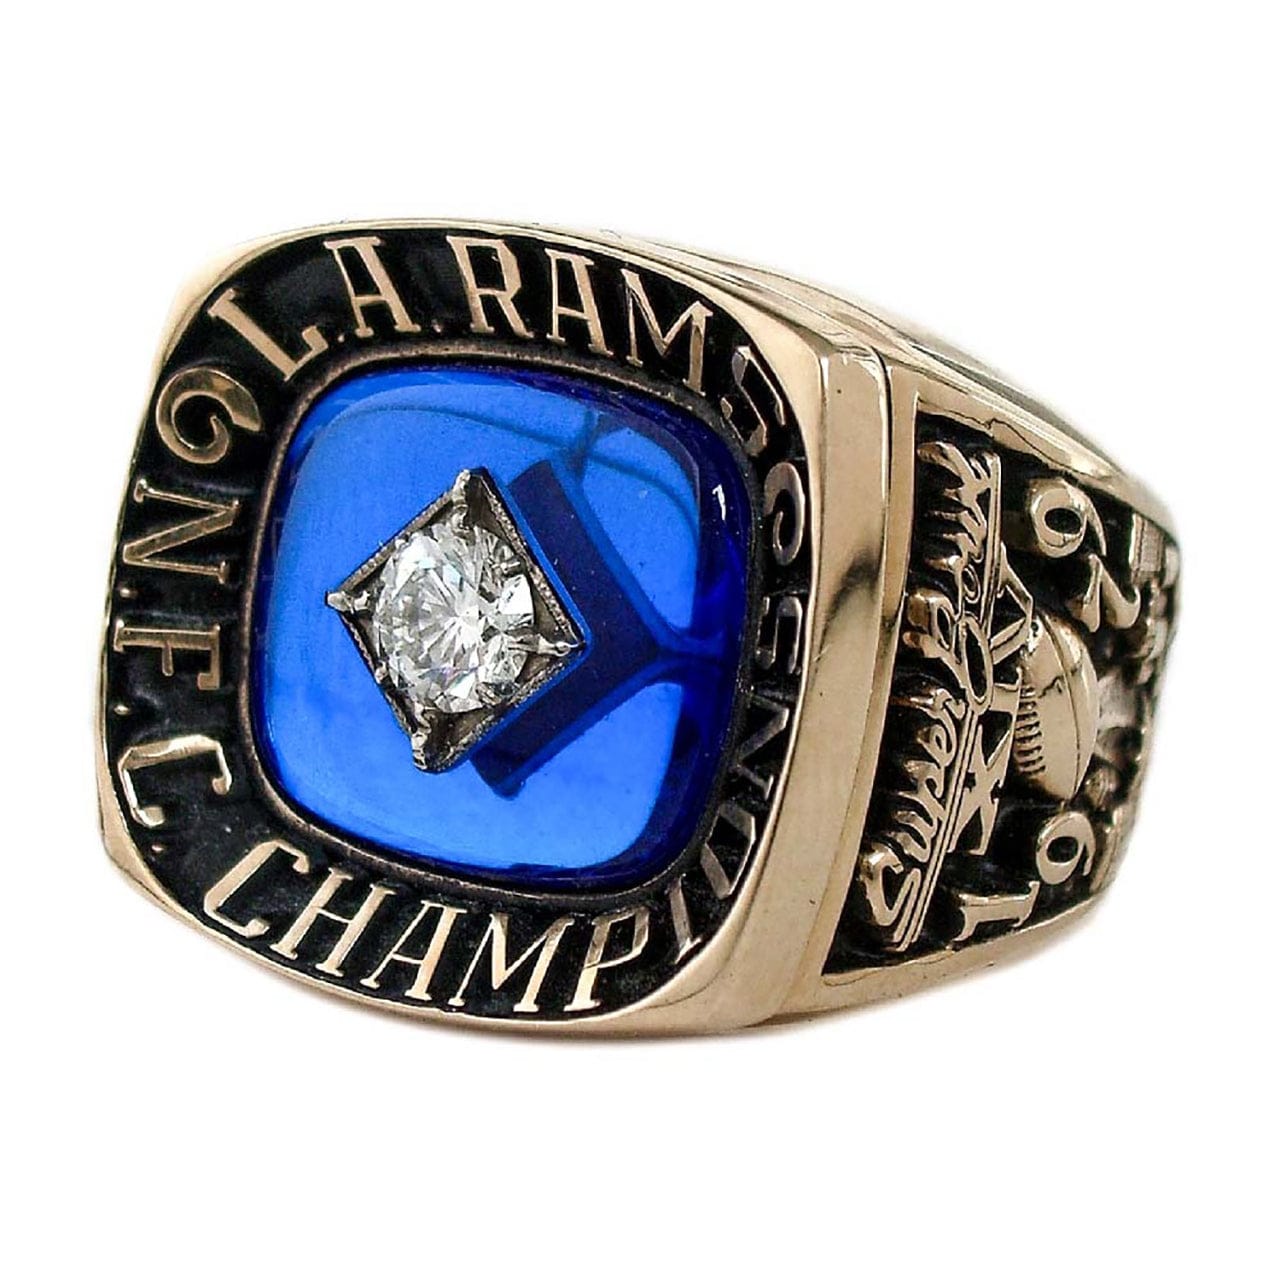 rams championship ring cost